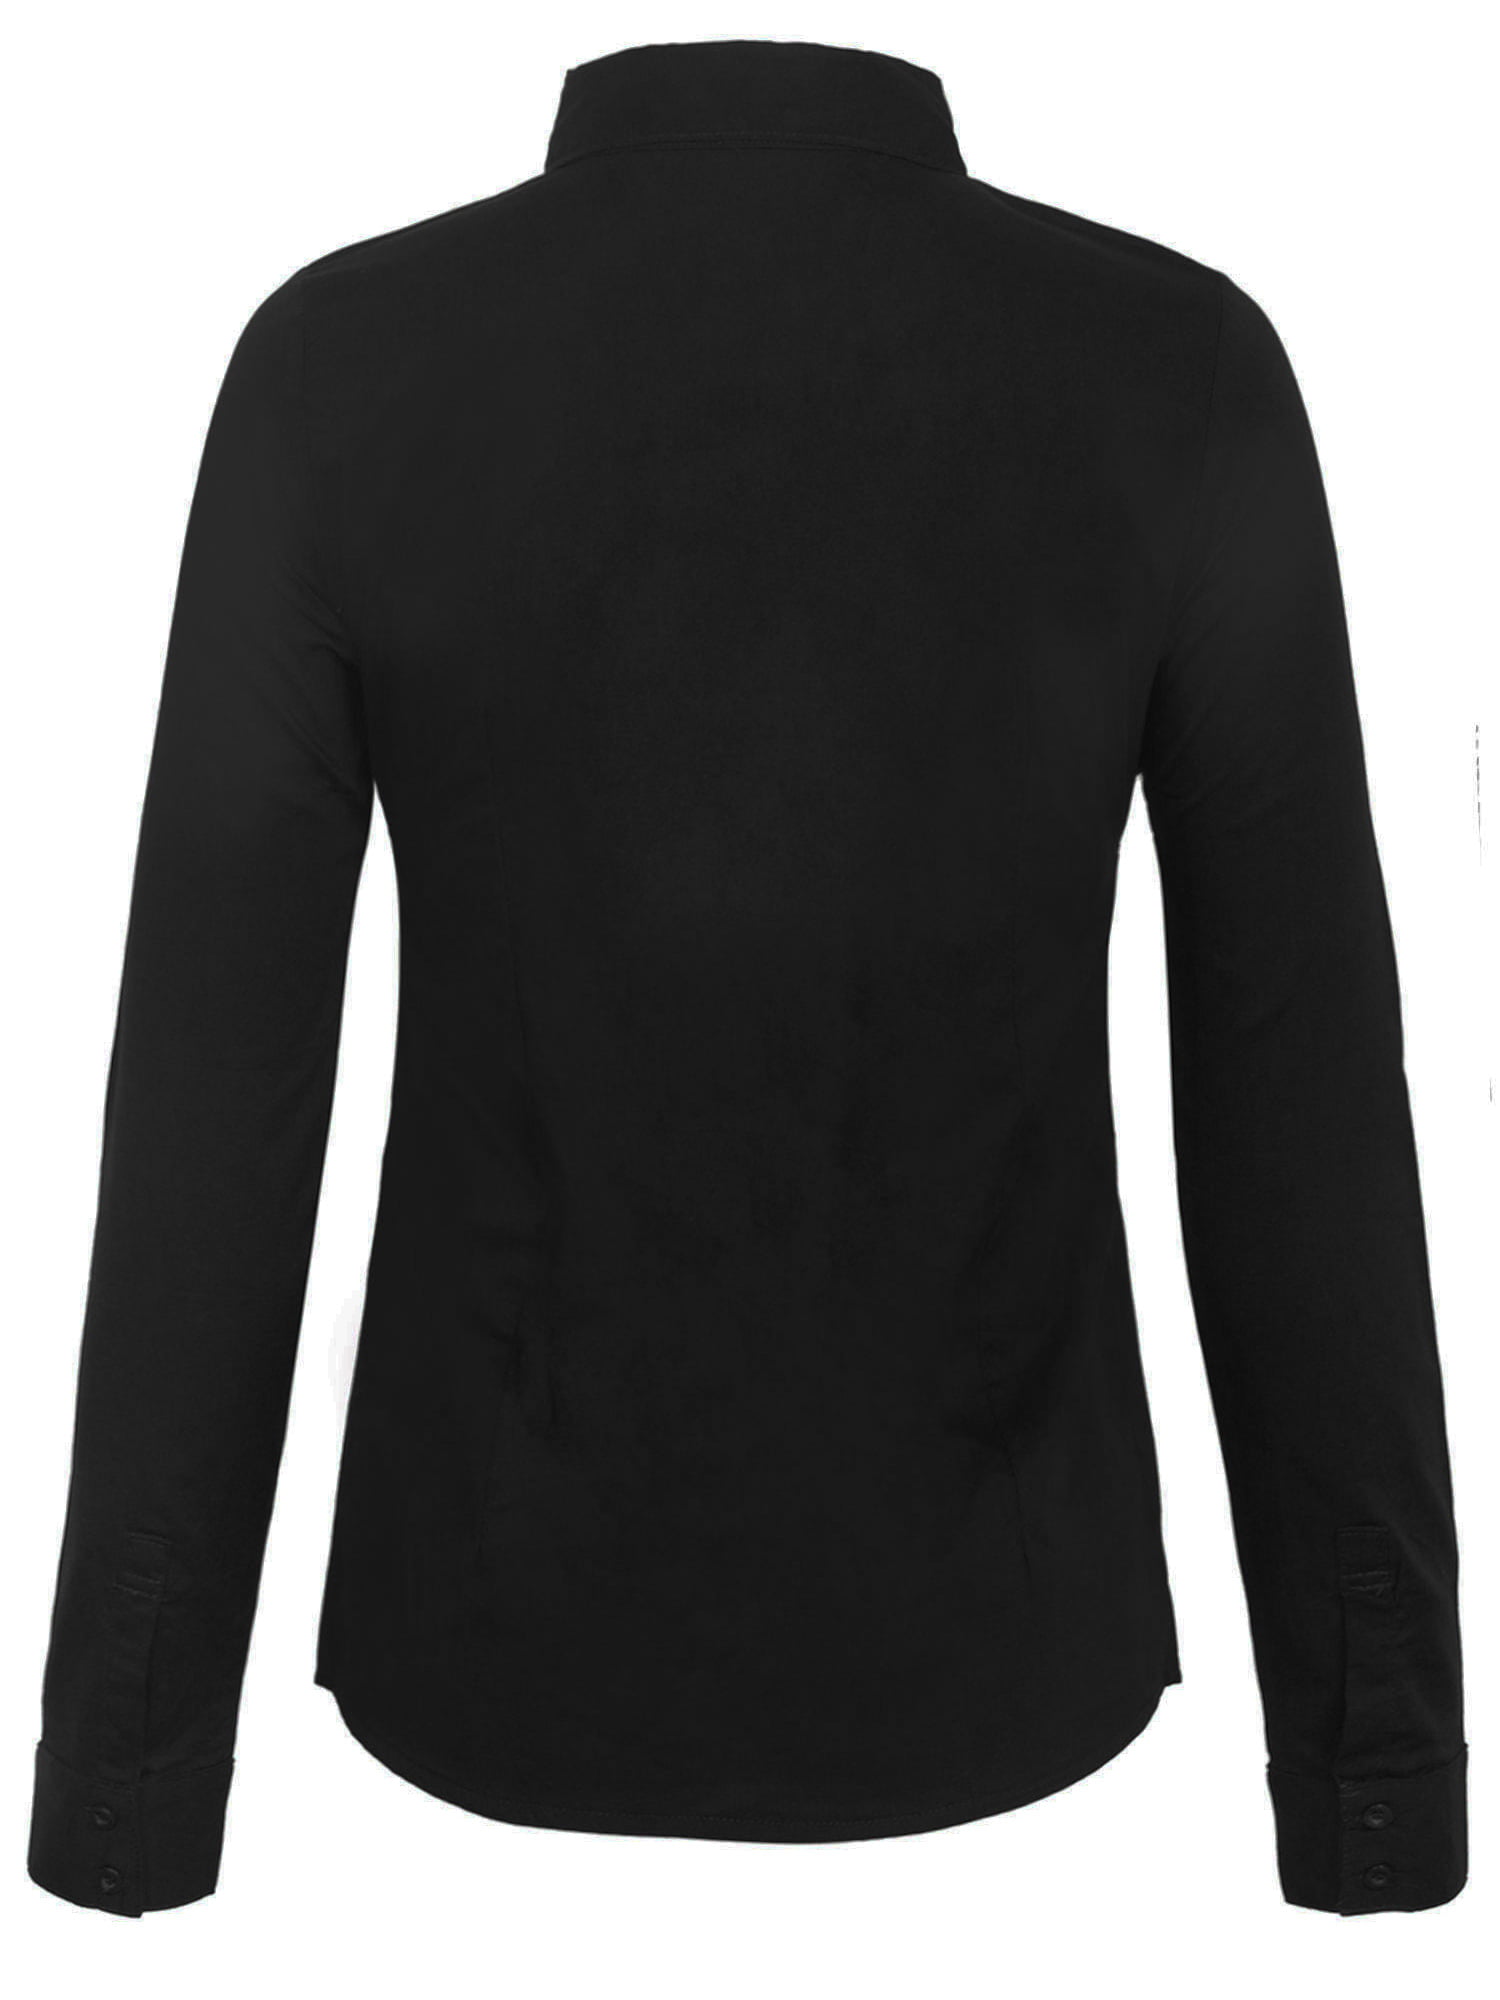 womens black dress shirt walmart